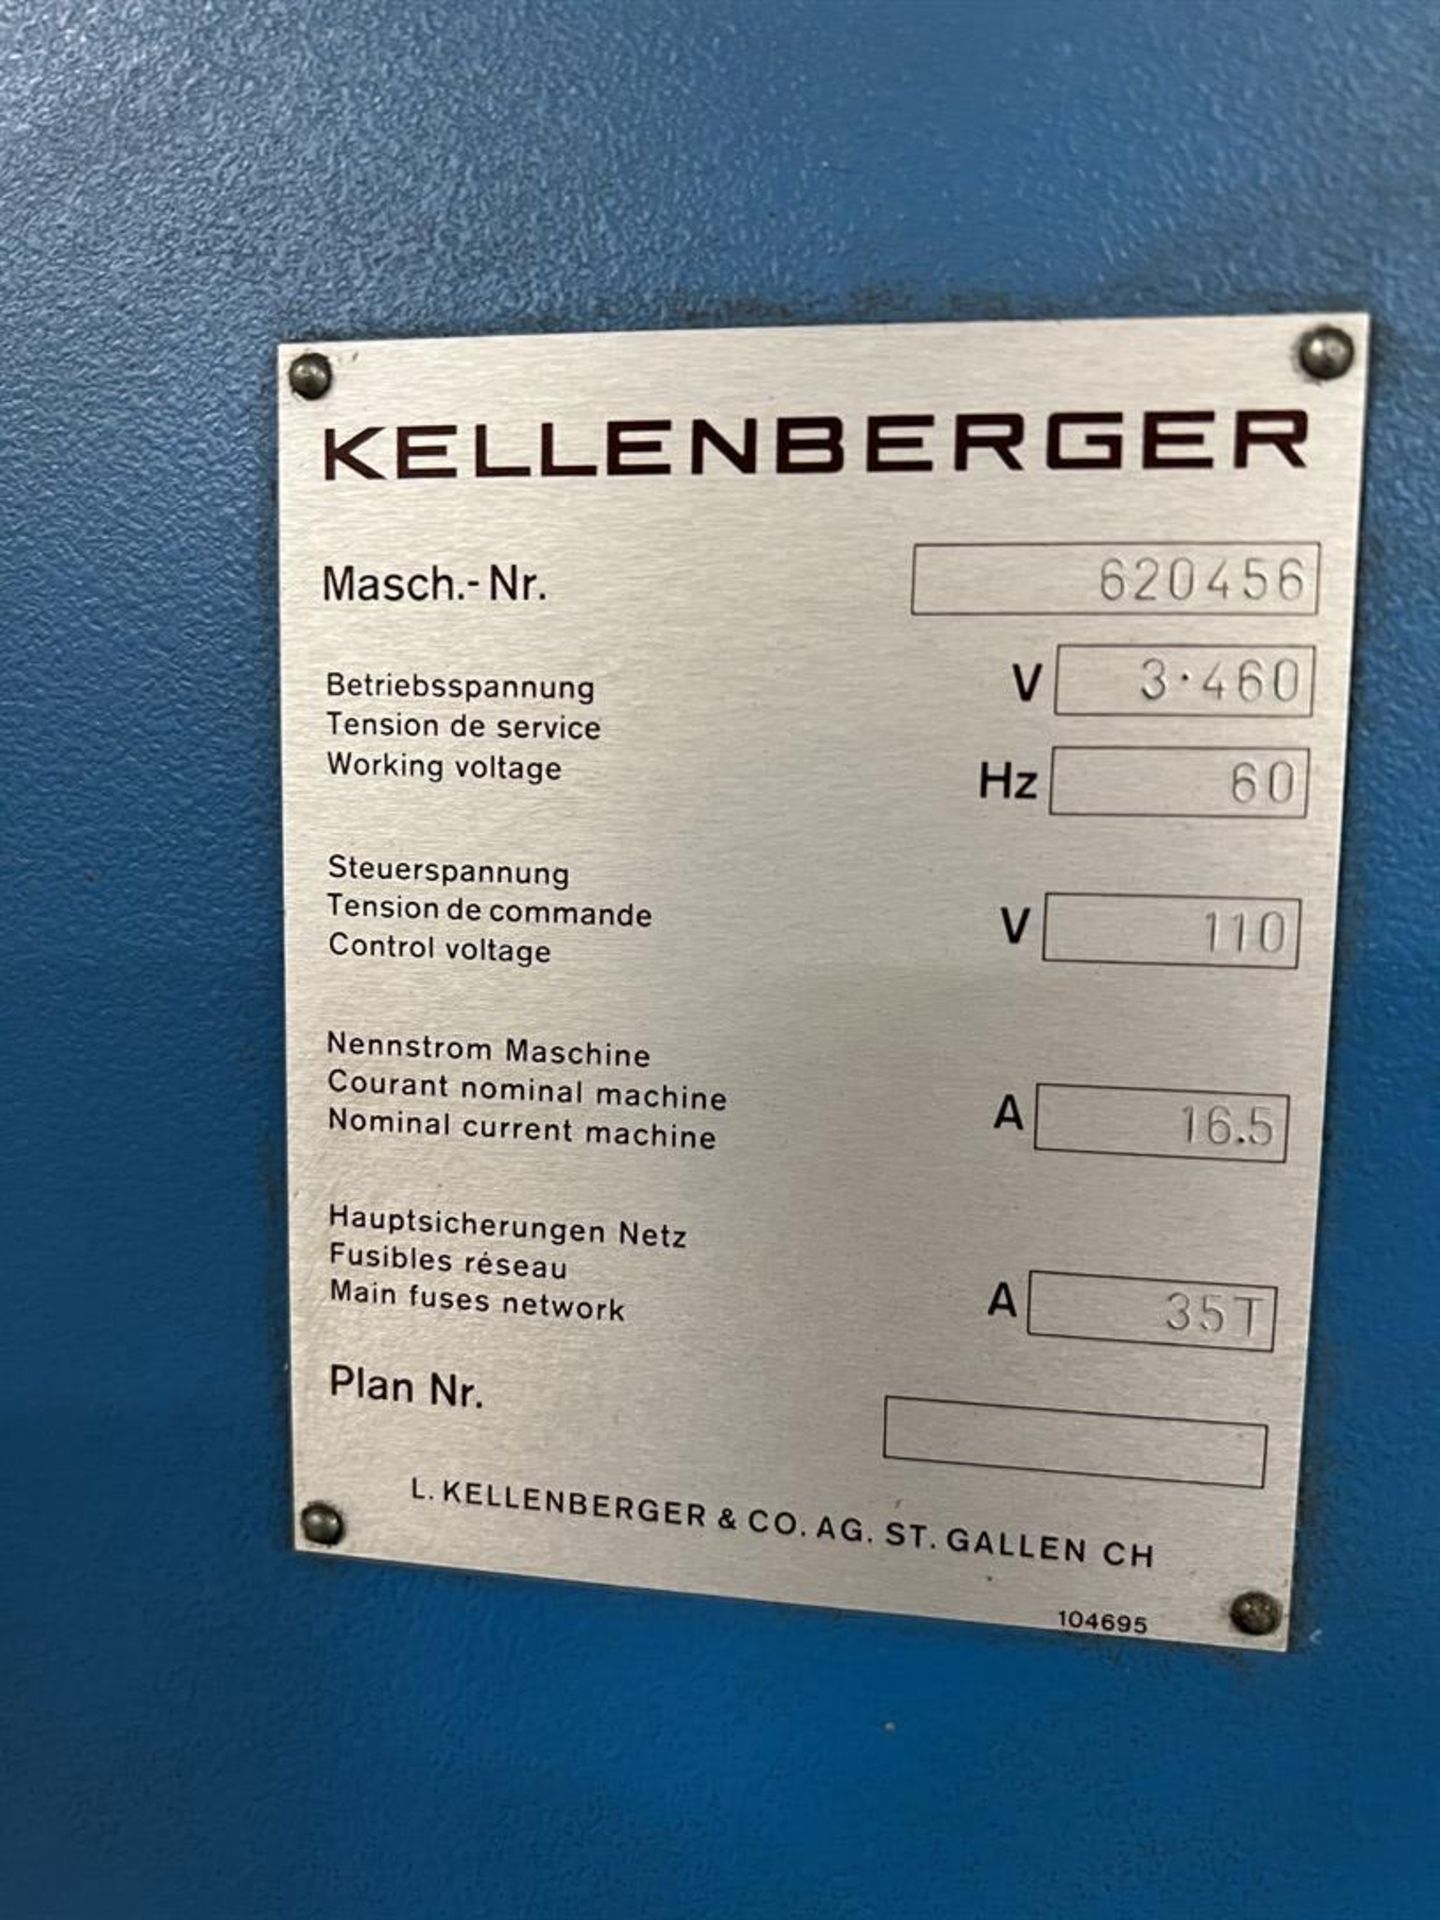 KELLENBERGER UR 125X600 CNC Universal Cylindrical Grinder, s/n 620456, w/ KELCO 70 Control - Image 10 of 10